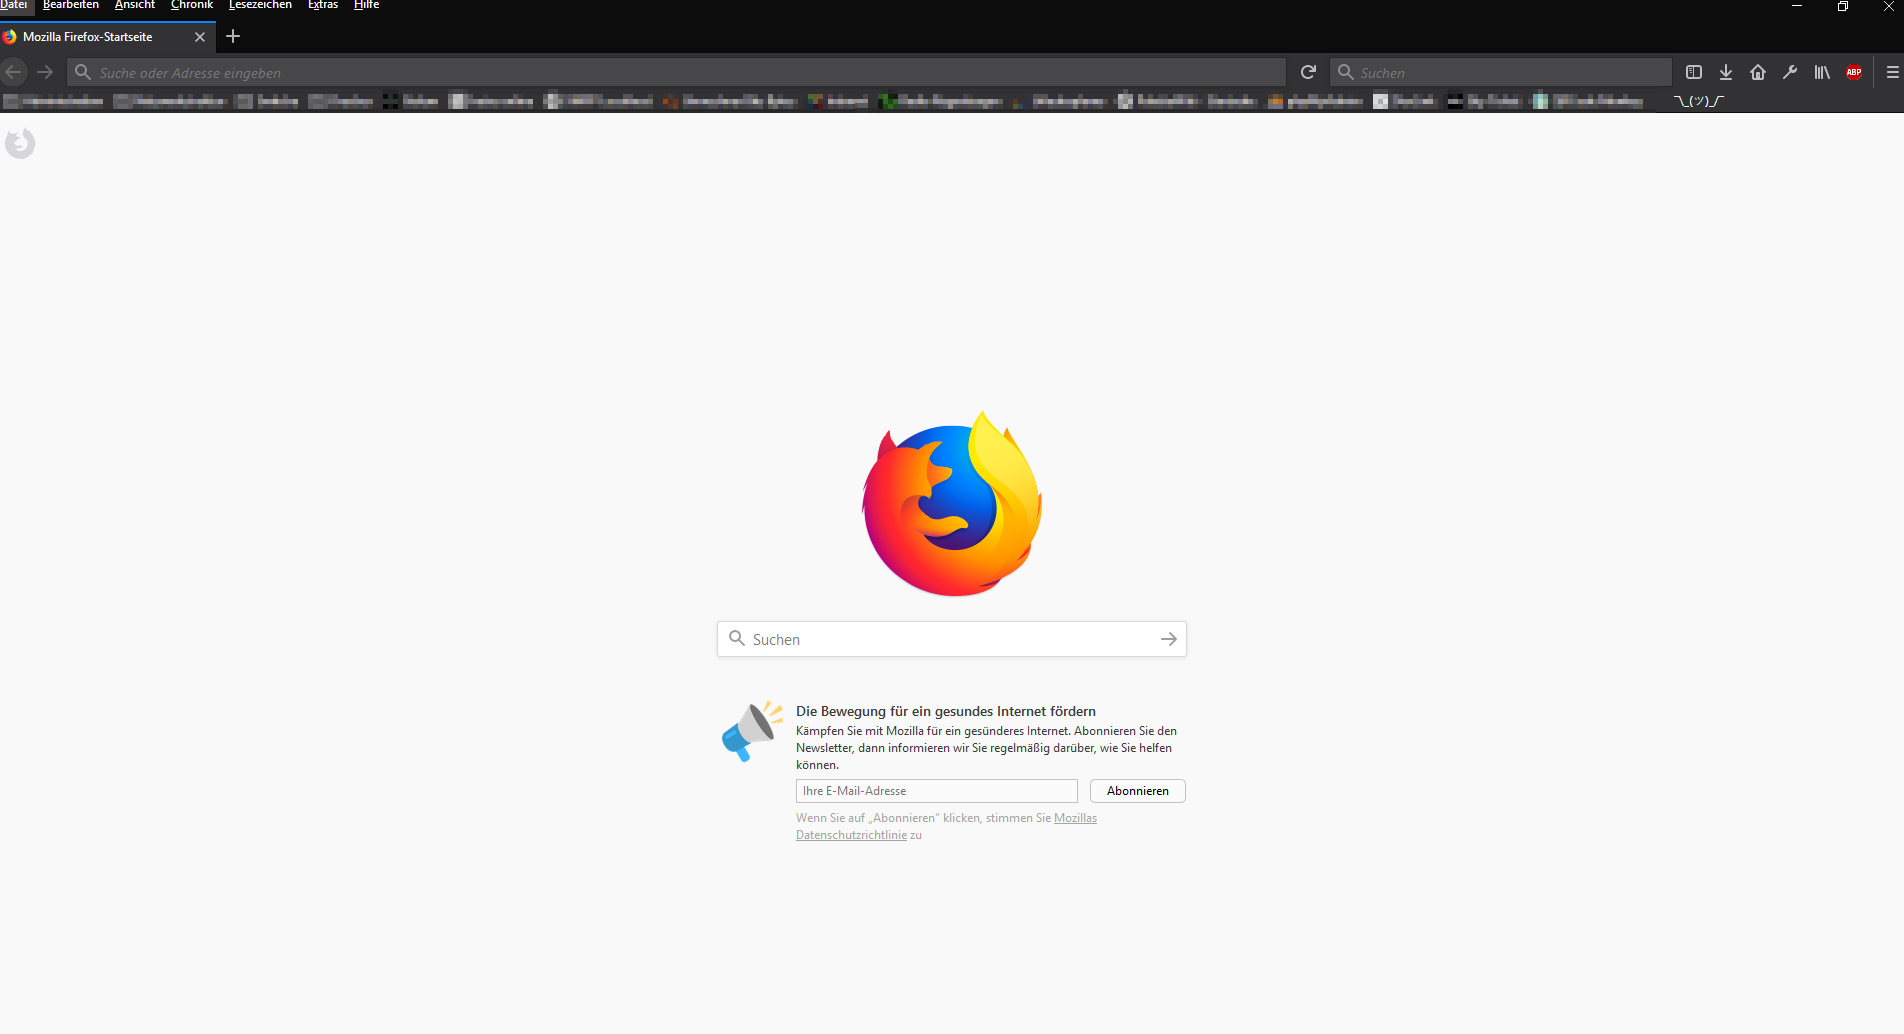 Firefox Quantum landing page